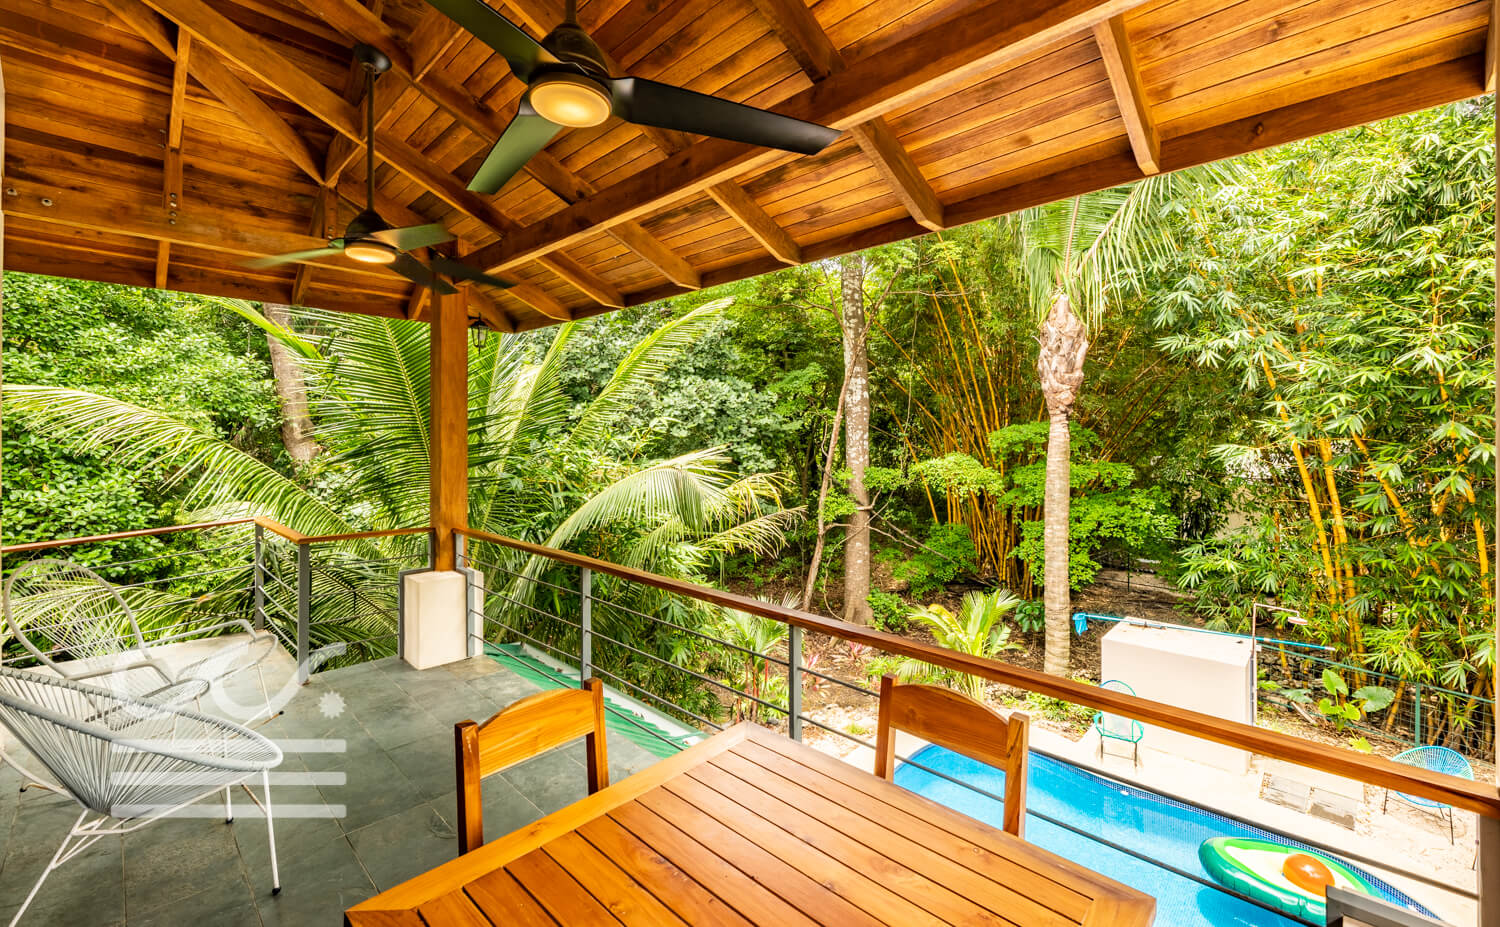 Casa-Nambi-Wanderlust-Realty-Real-Estate-Rentals-Nosara-Costa-Rica-10.jpg